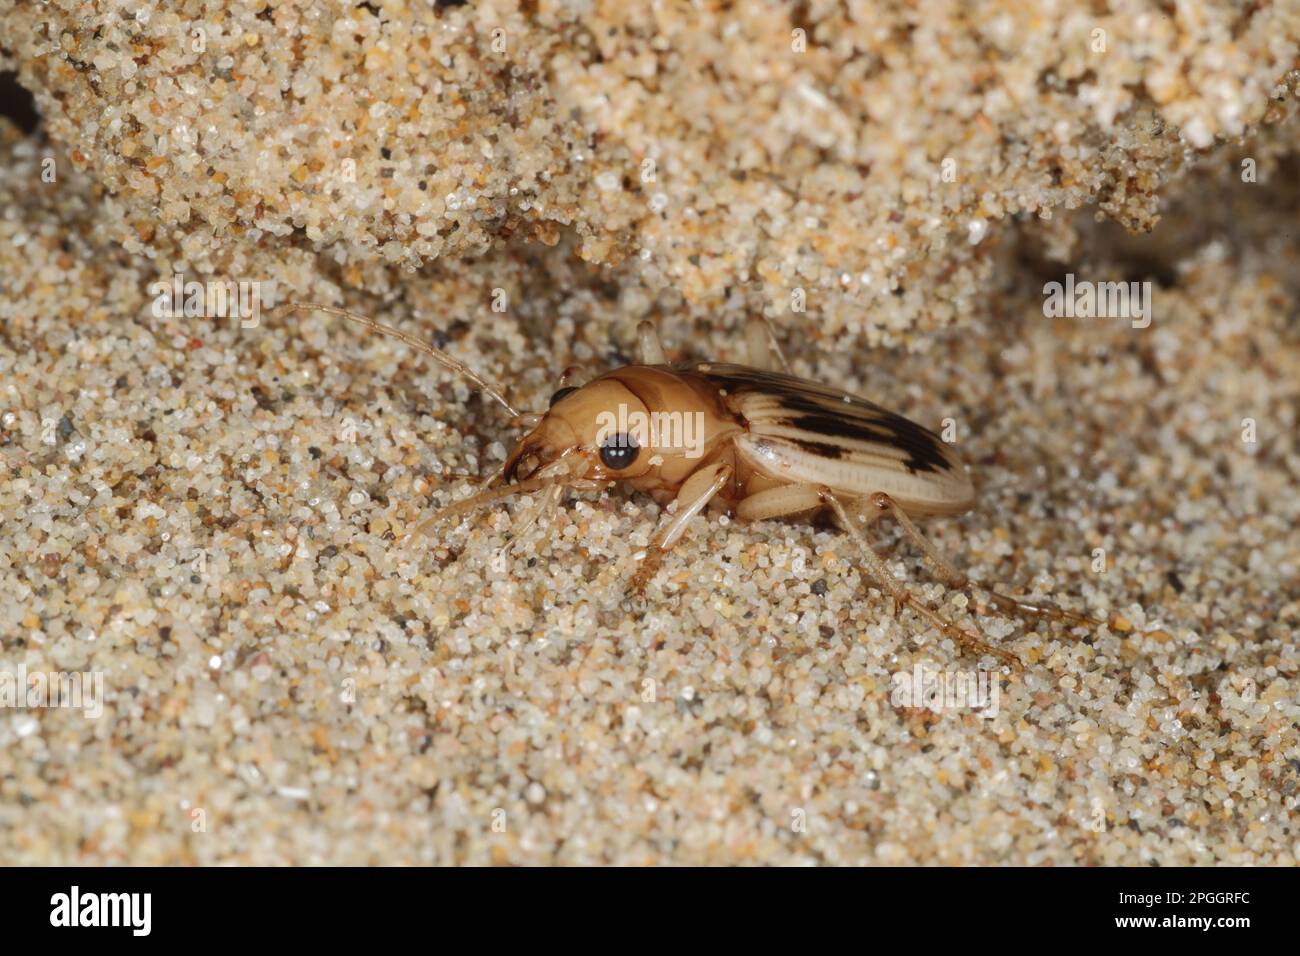 Beachcomber Beetle (Nebria complanata) adult, under strandline debris on beach, Gower Peninsula, Glamorgan, Wales, United Kingdom Stock Photo